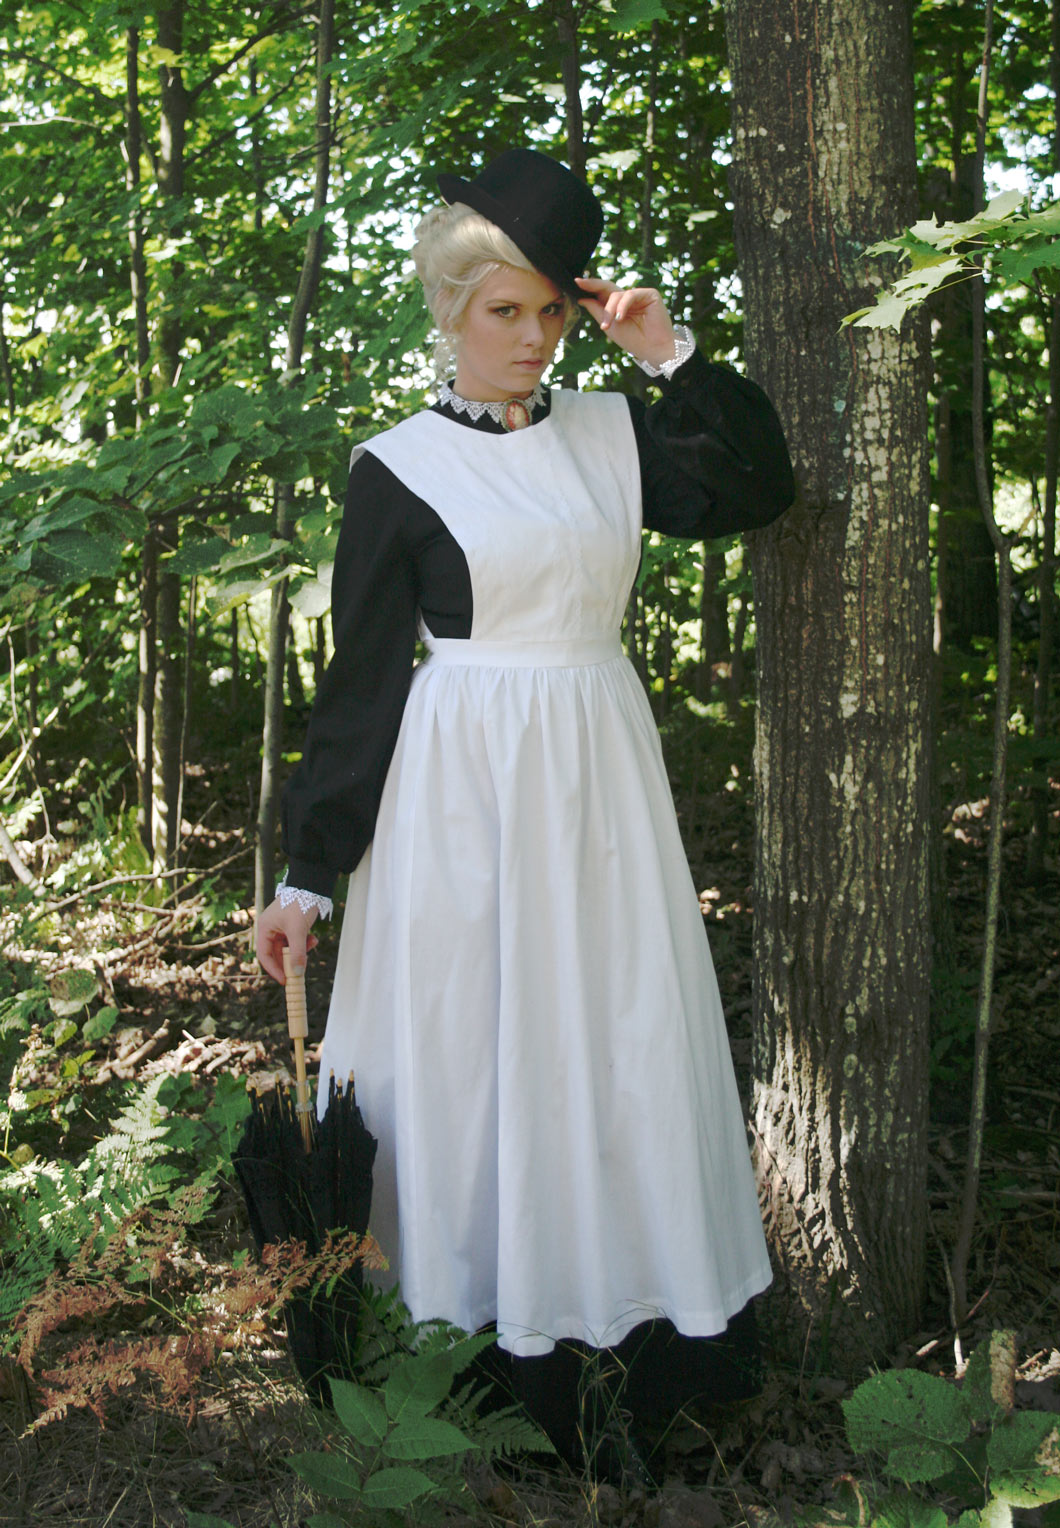 Victorian housemaid costume